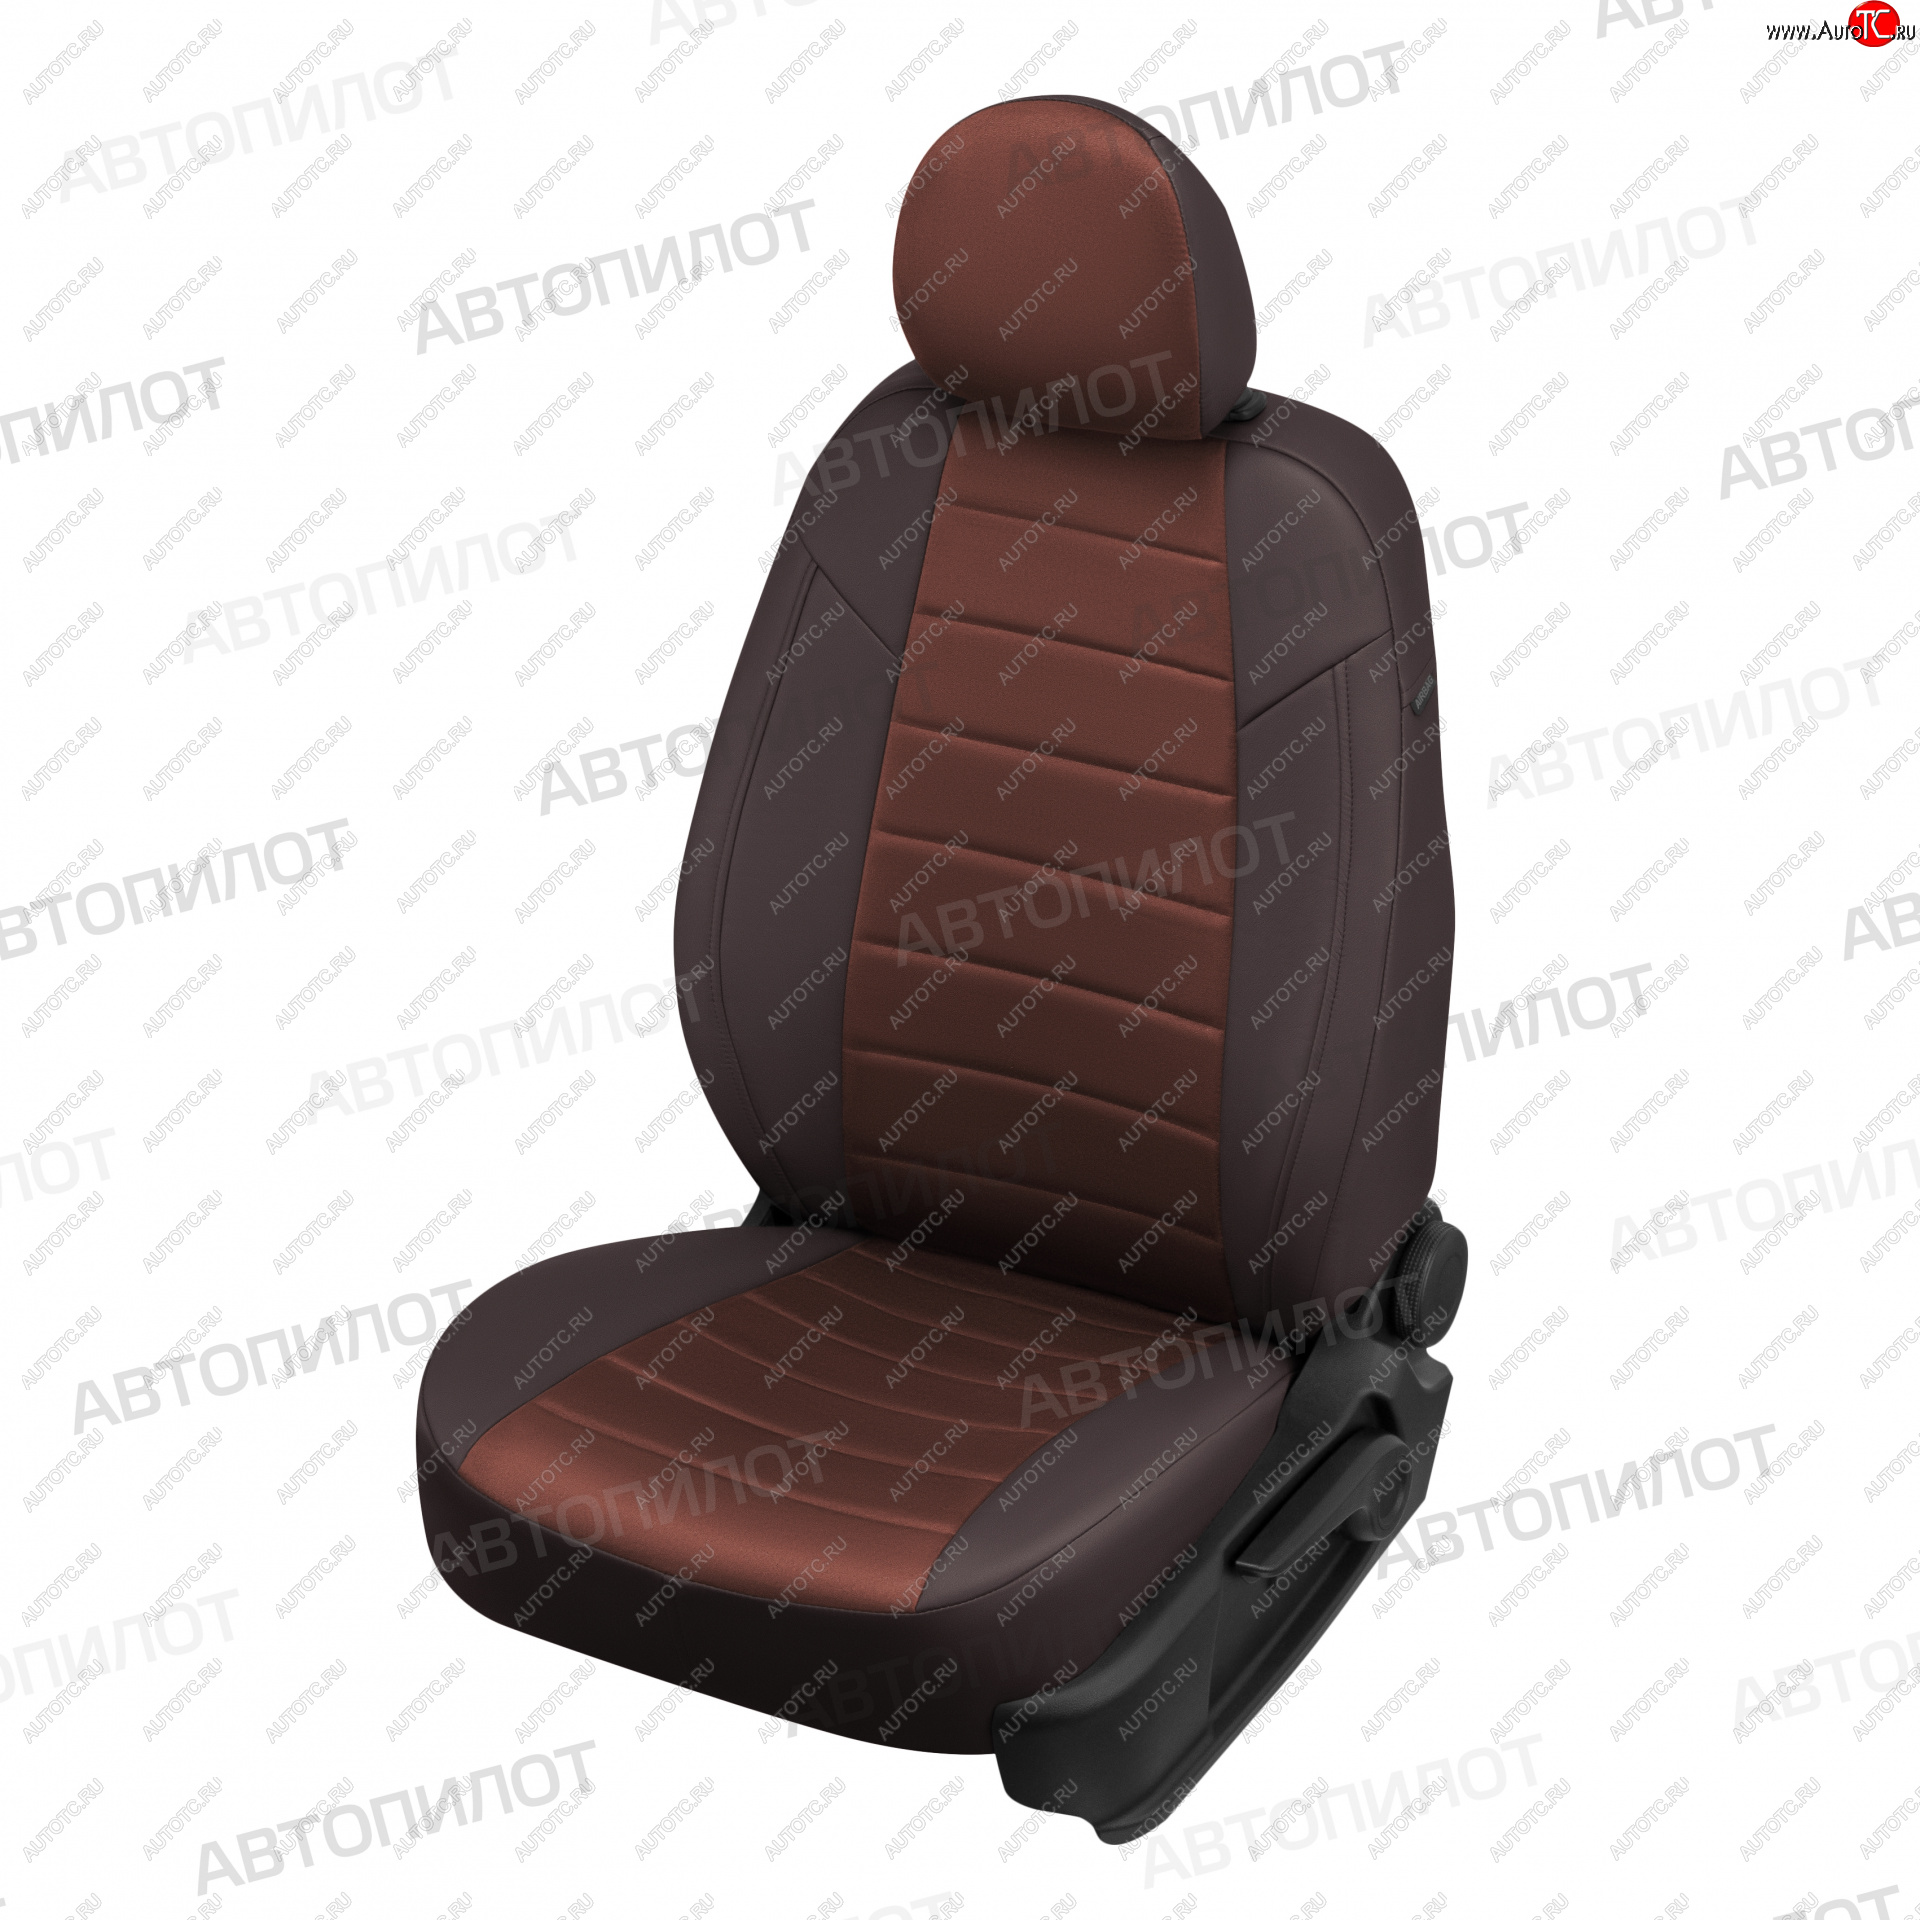 13 449 р. Чехлы сидений (экокожа/алькантара) Автопилот  Ford Mondeo (2000-2007) (шоколад)